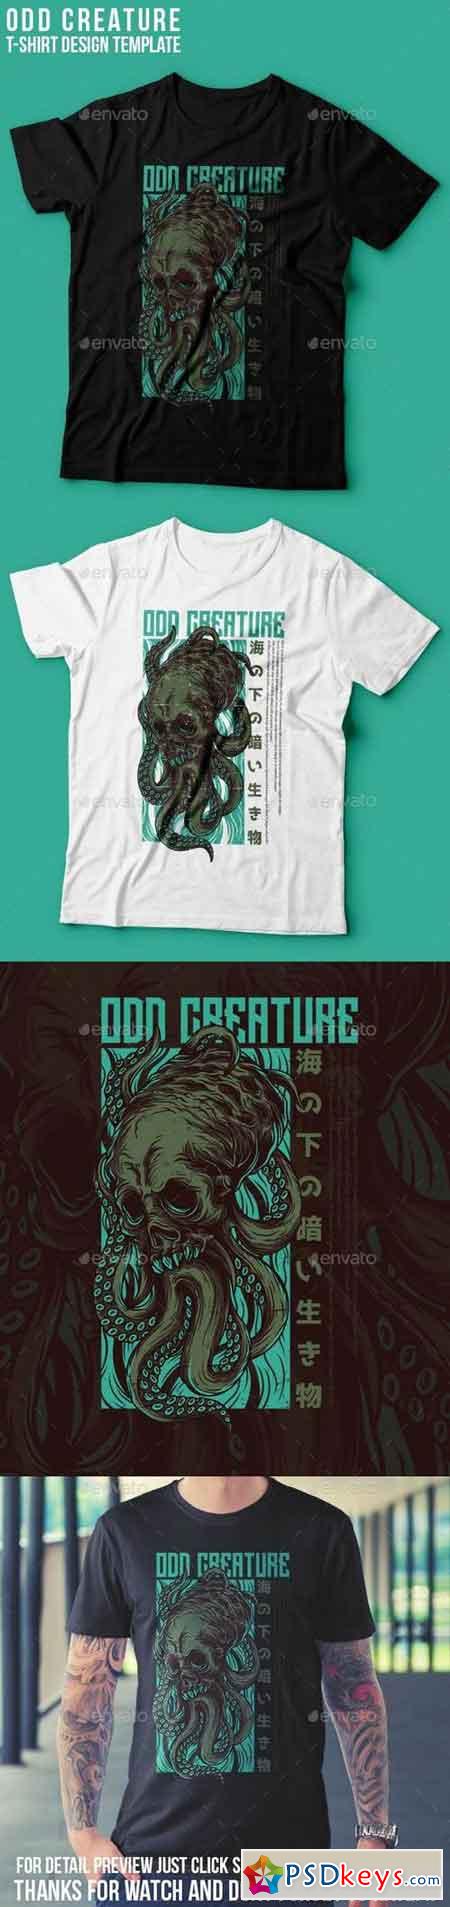 Odd Creature T-Shirt Design 22939374